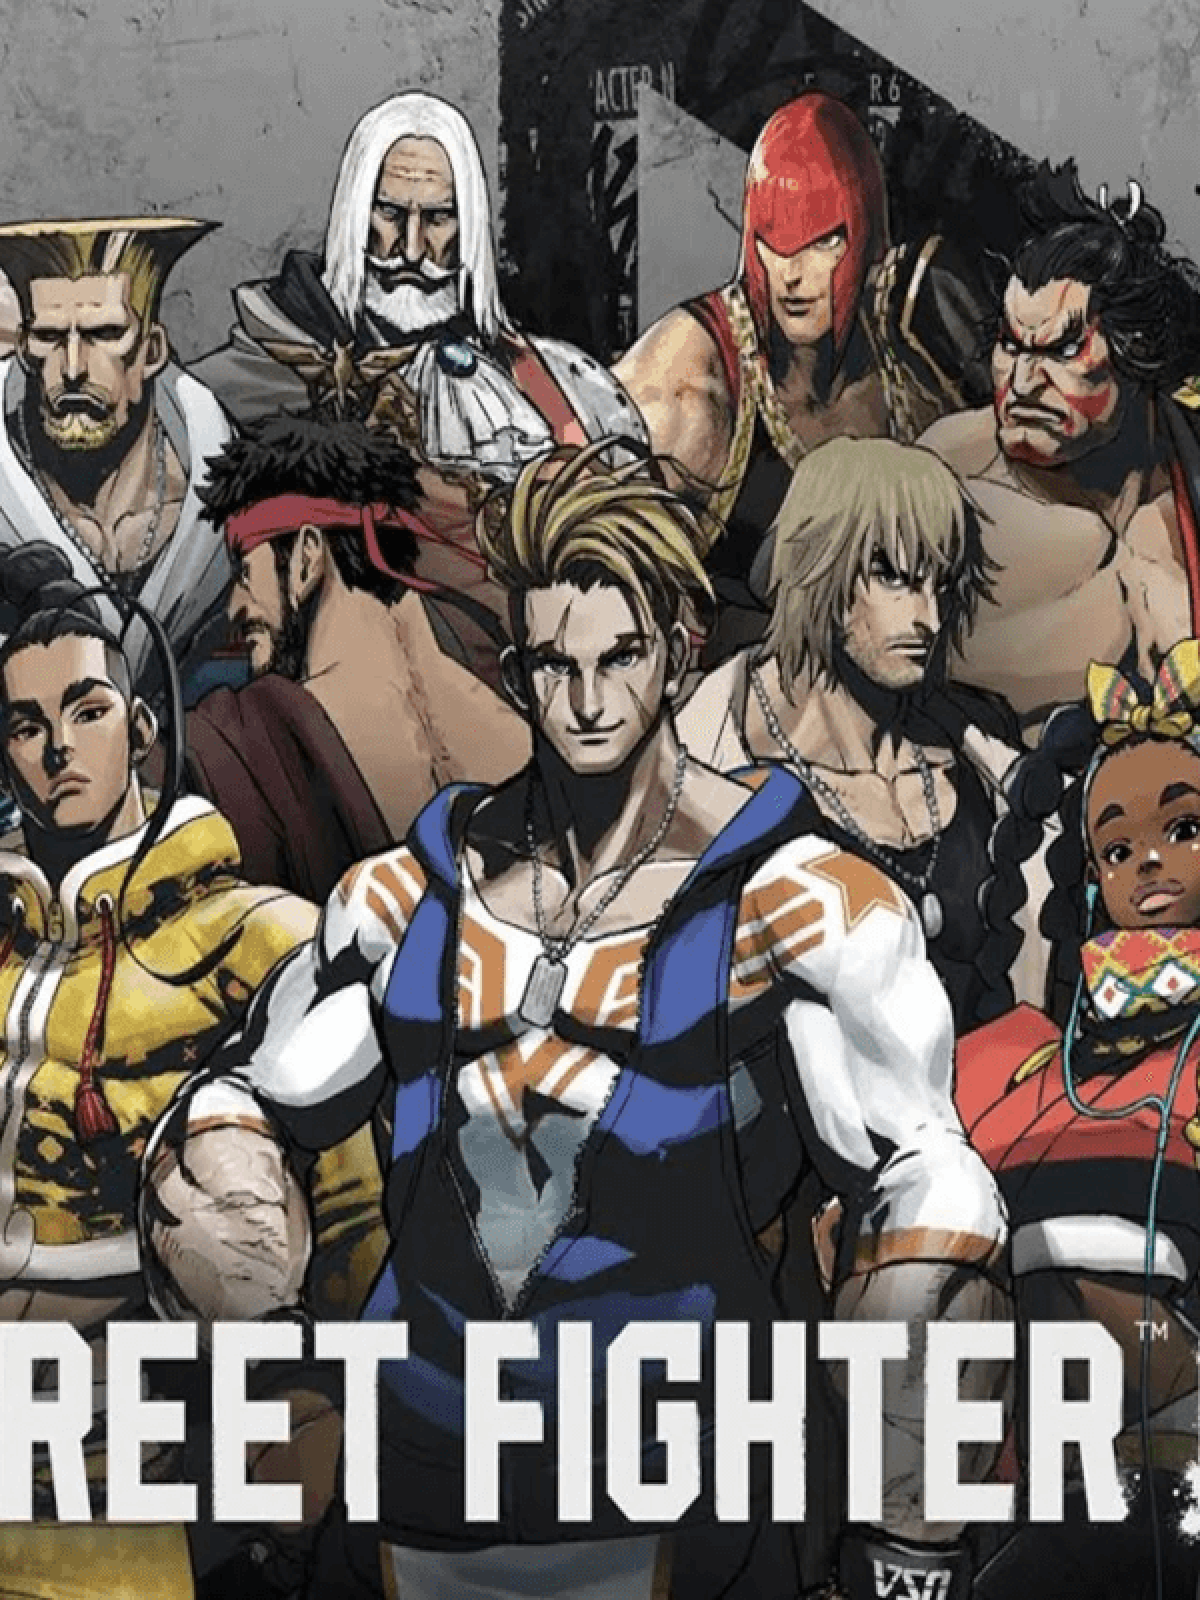 Artista desenha versões futuras de lutadores de Street Fighter